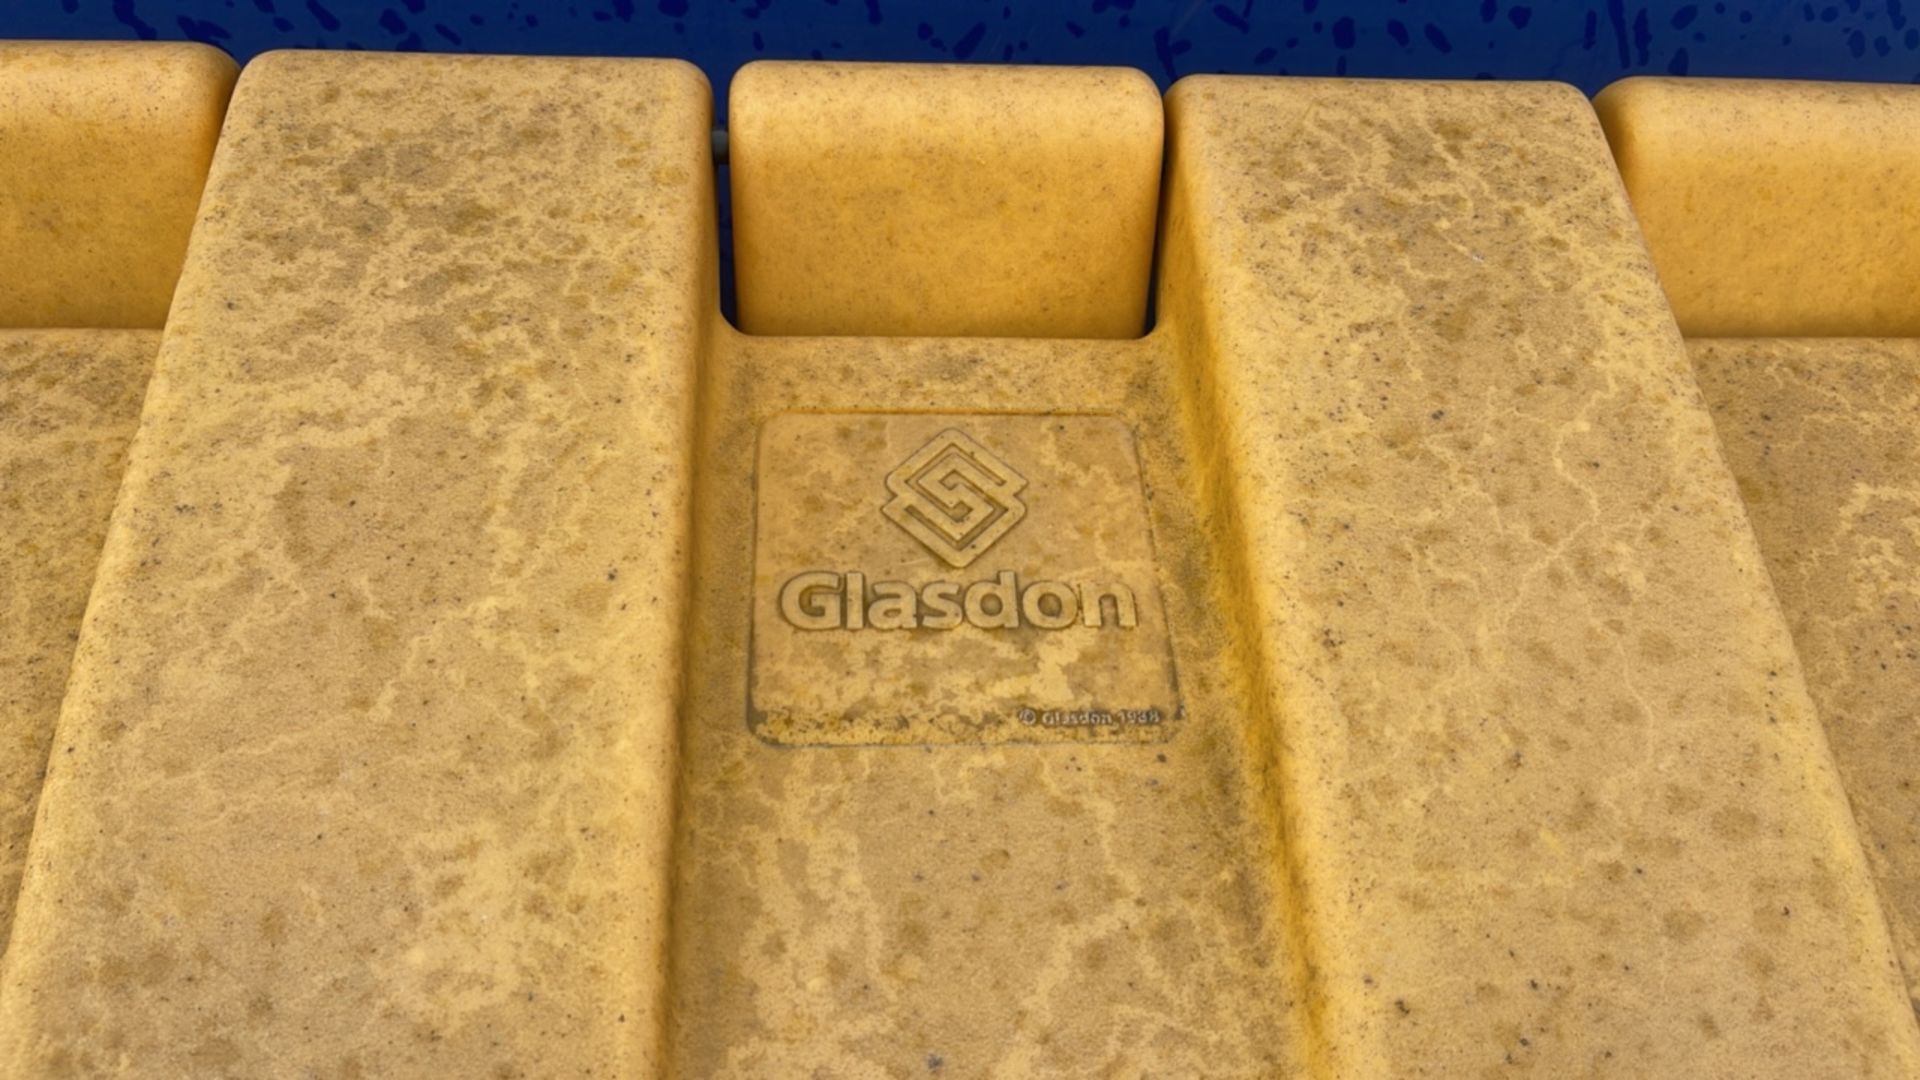 Glasdon Grit Box - Image 3 of 4